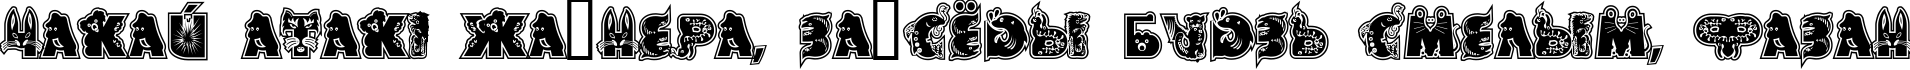 Пример написания шрифтом FK Critter Collage.kz текста на белорусском